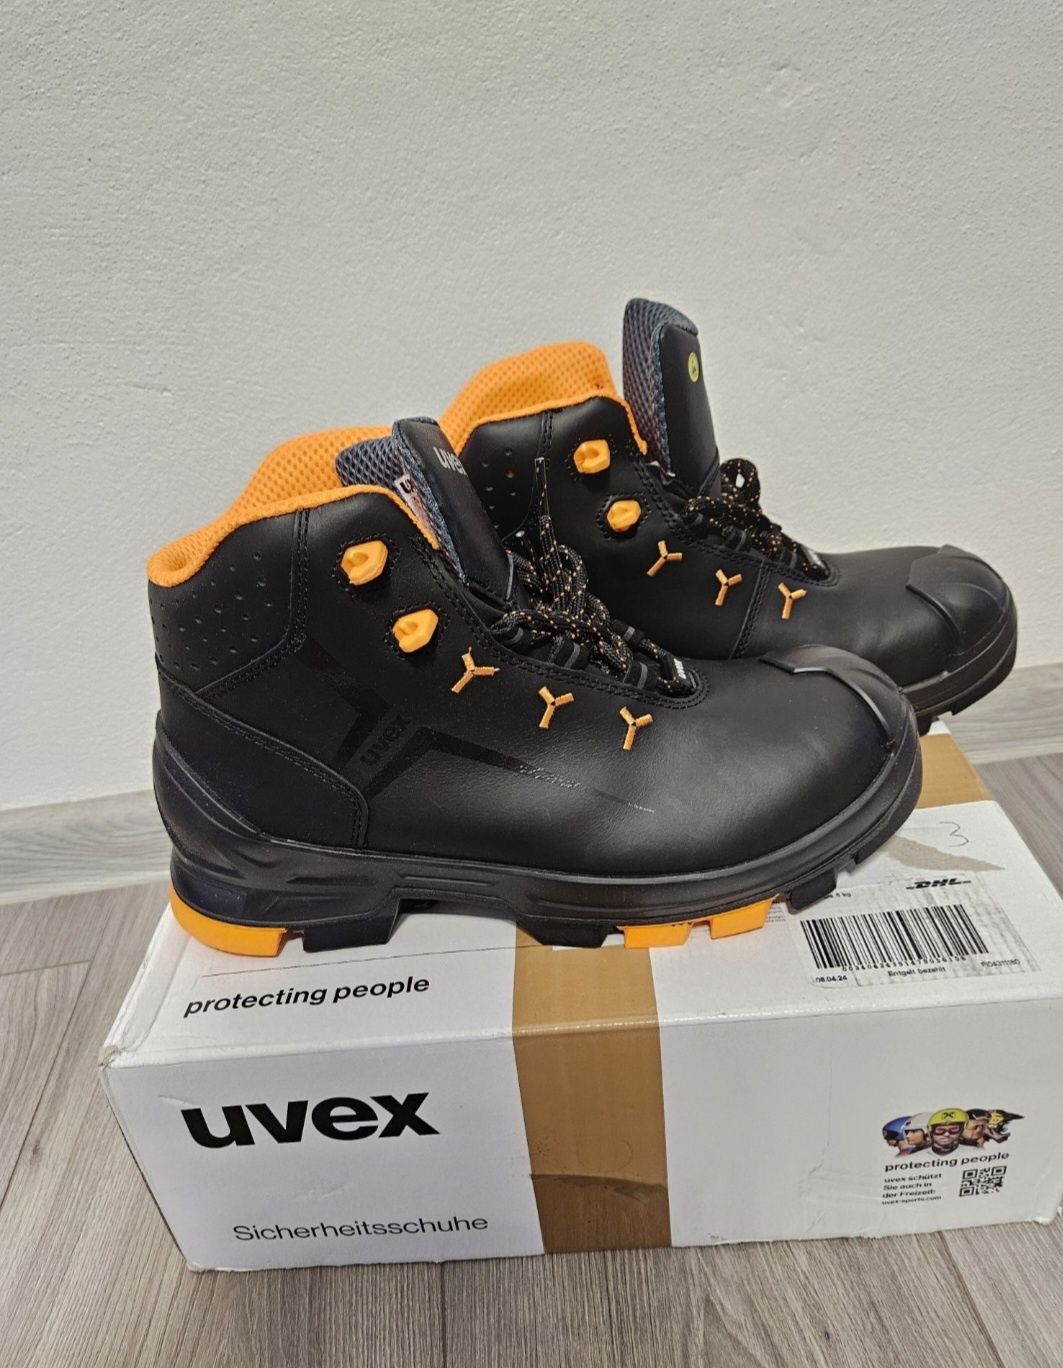 Bocanci(pantofi) protectie Uvex, 6503, bombeu compozit,